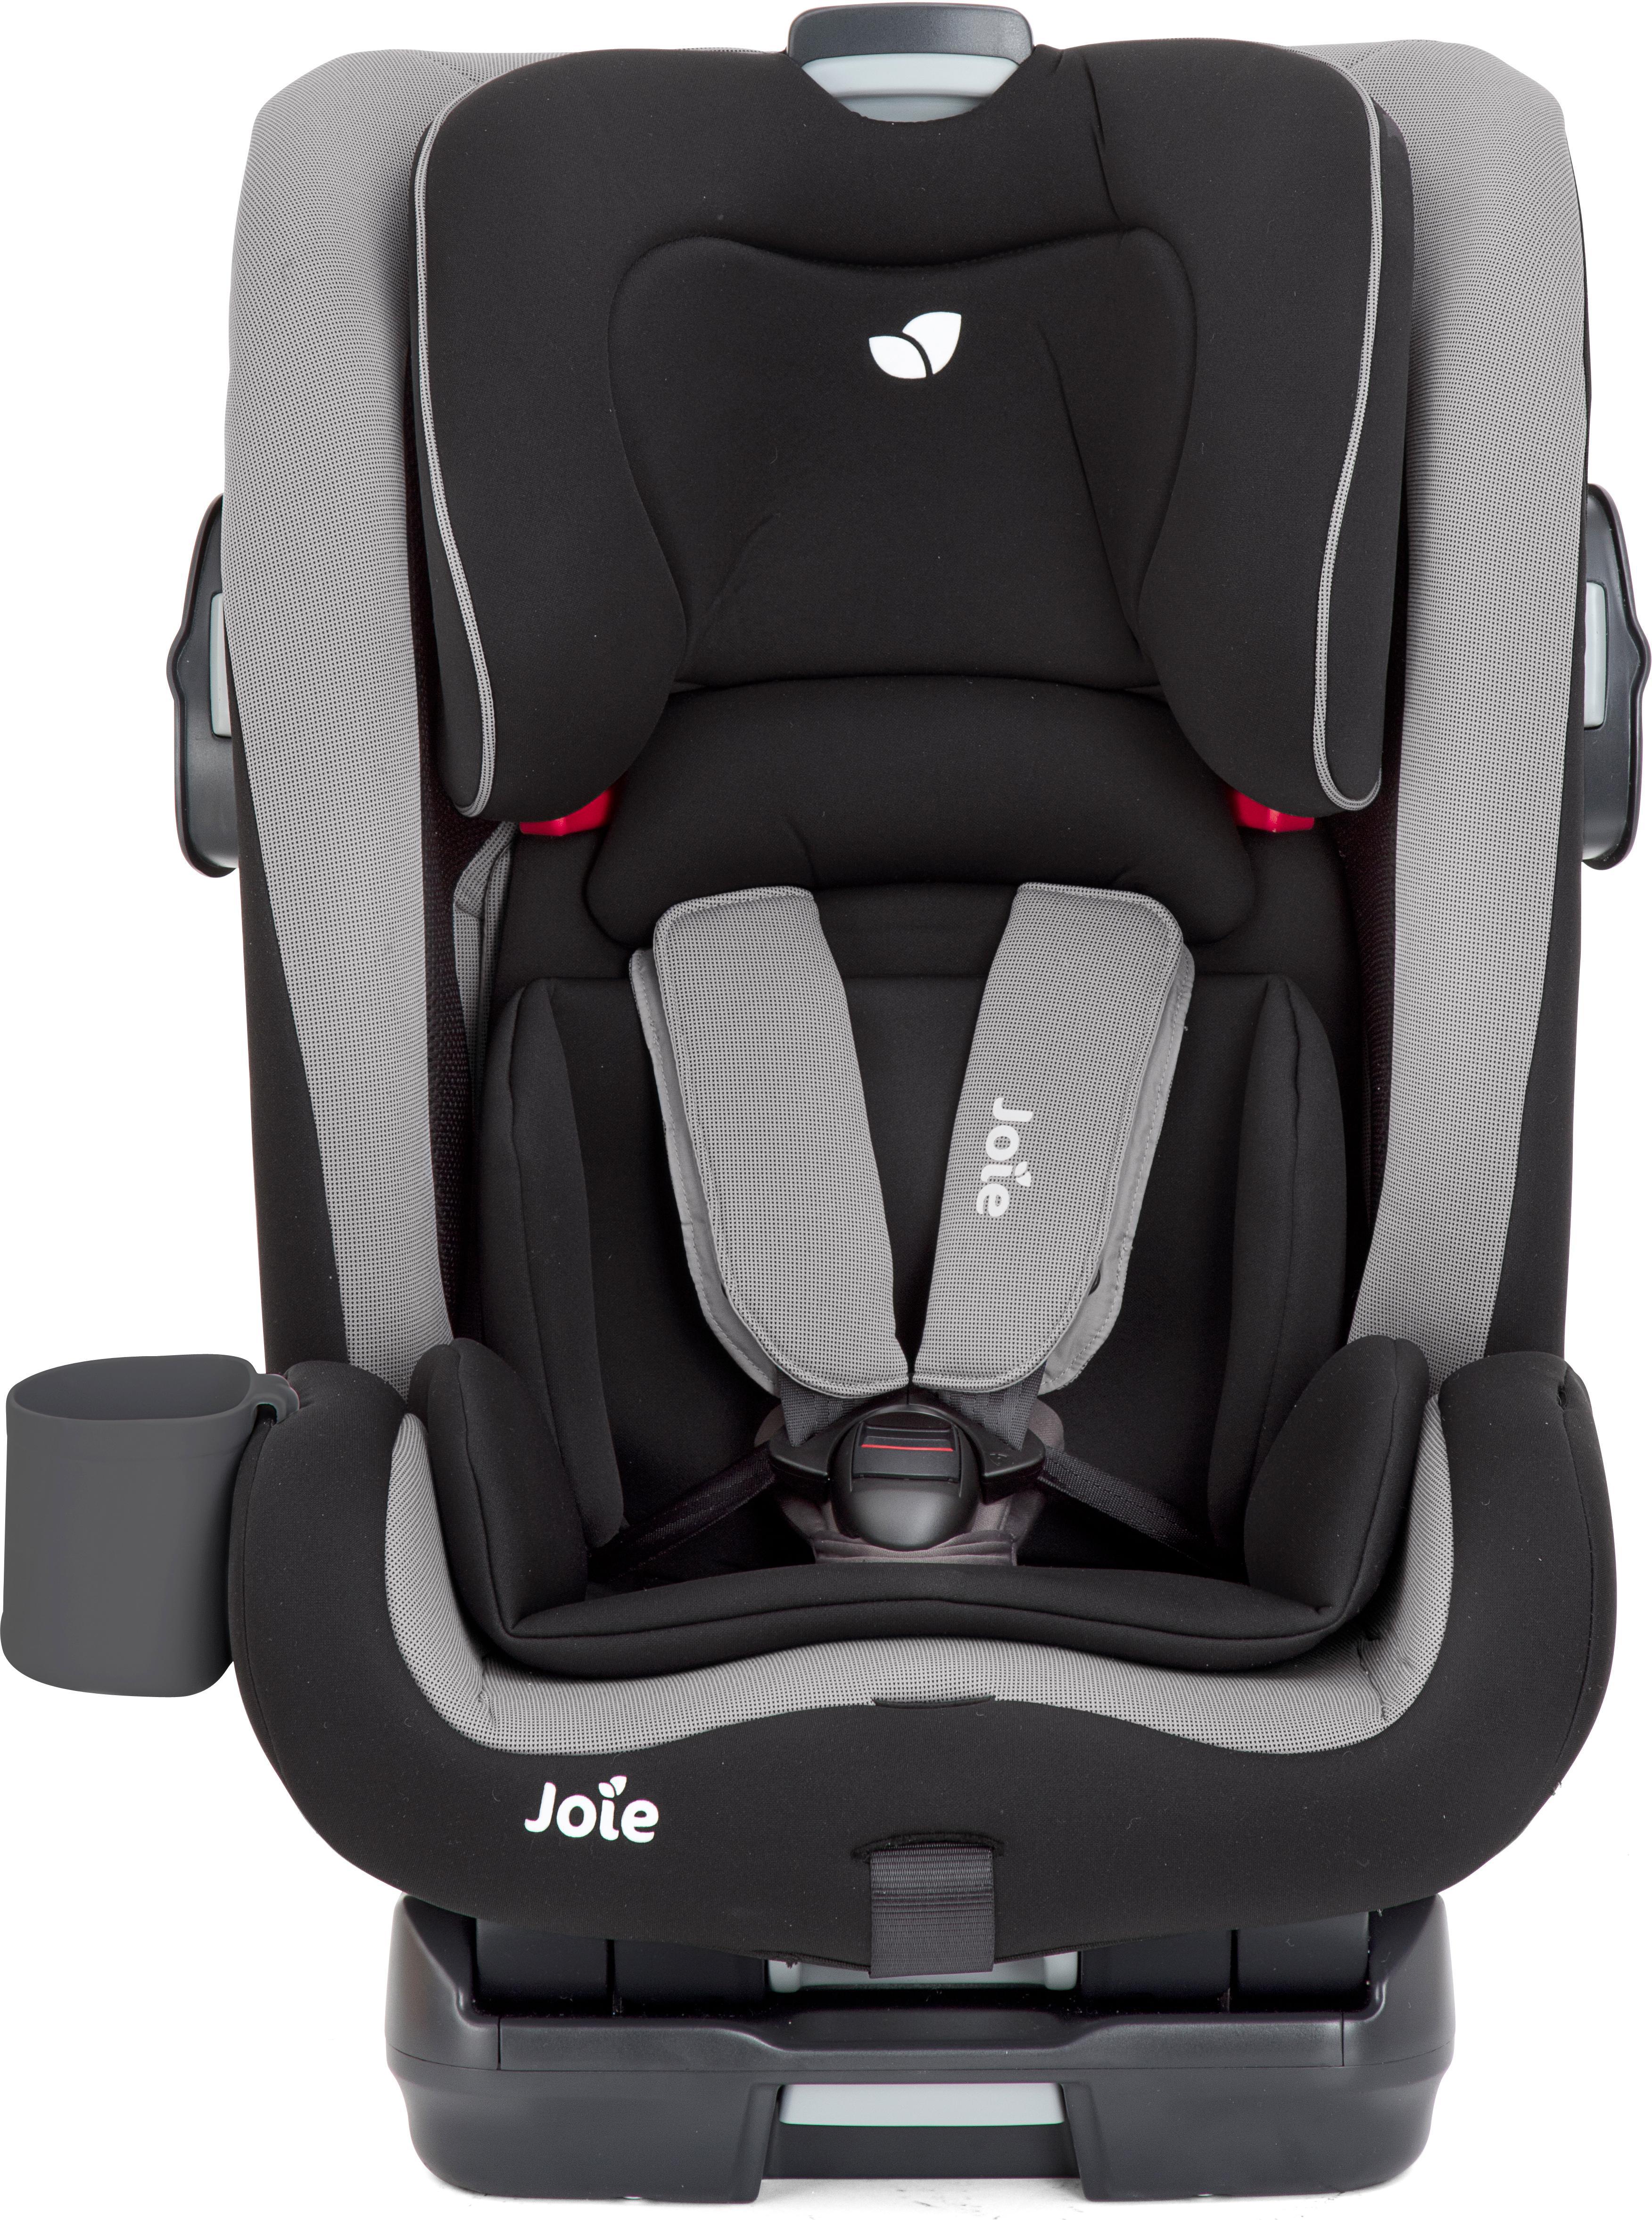 joie bold 123 car seat isofix